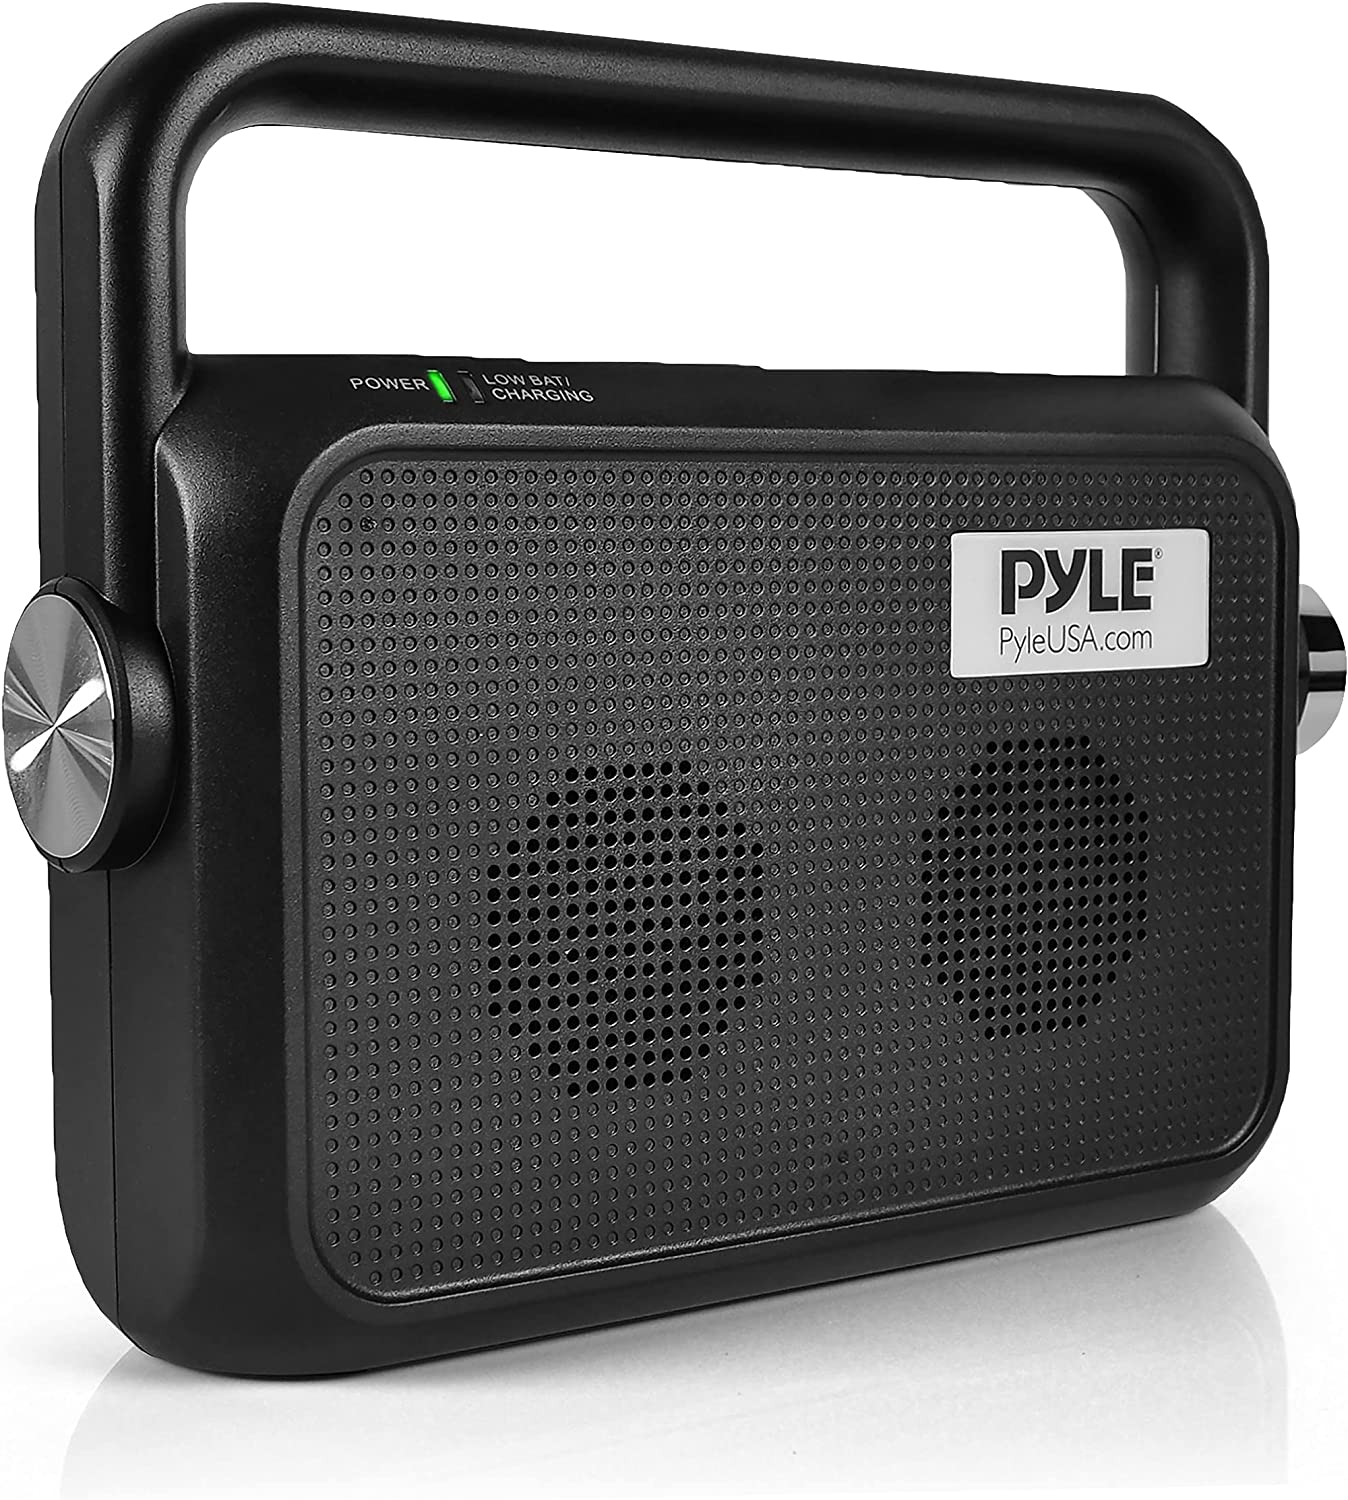 Wireless Portable Speaker Soundbox - 2.4ghz Full Range Stereo Sound Digital TV MP3 iPod Analog Cable